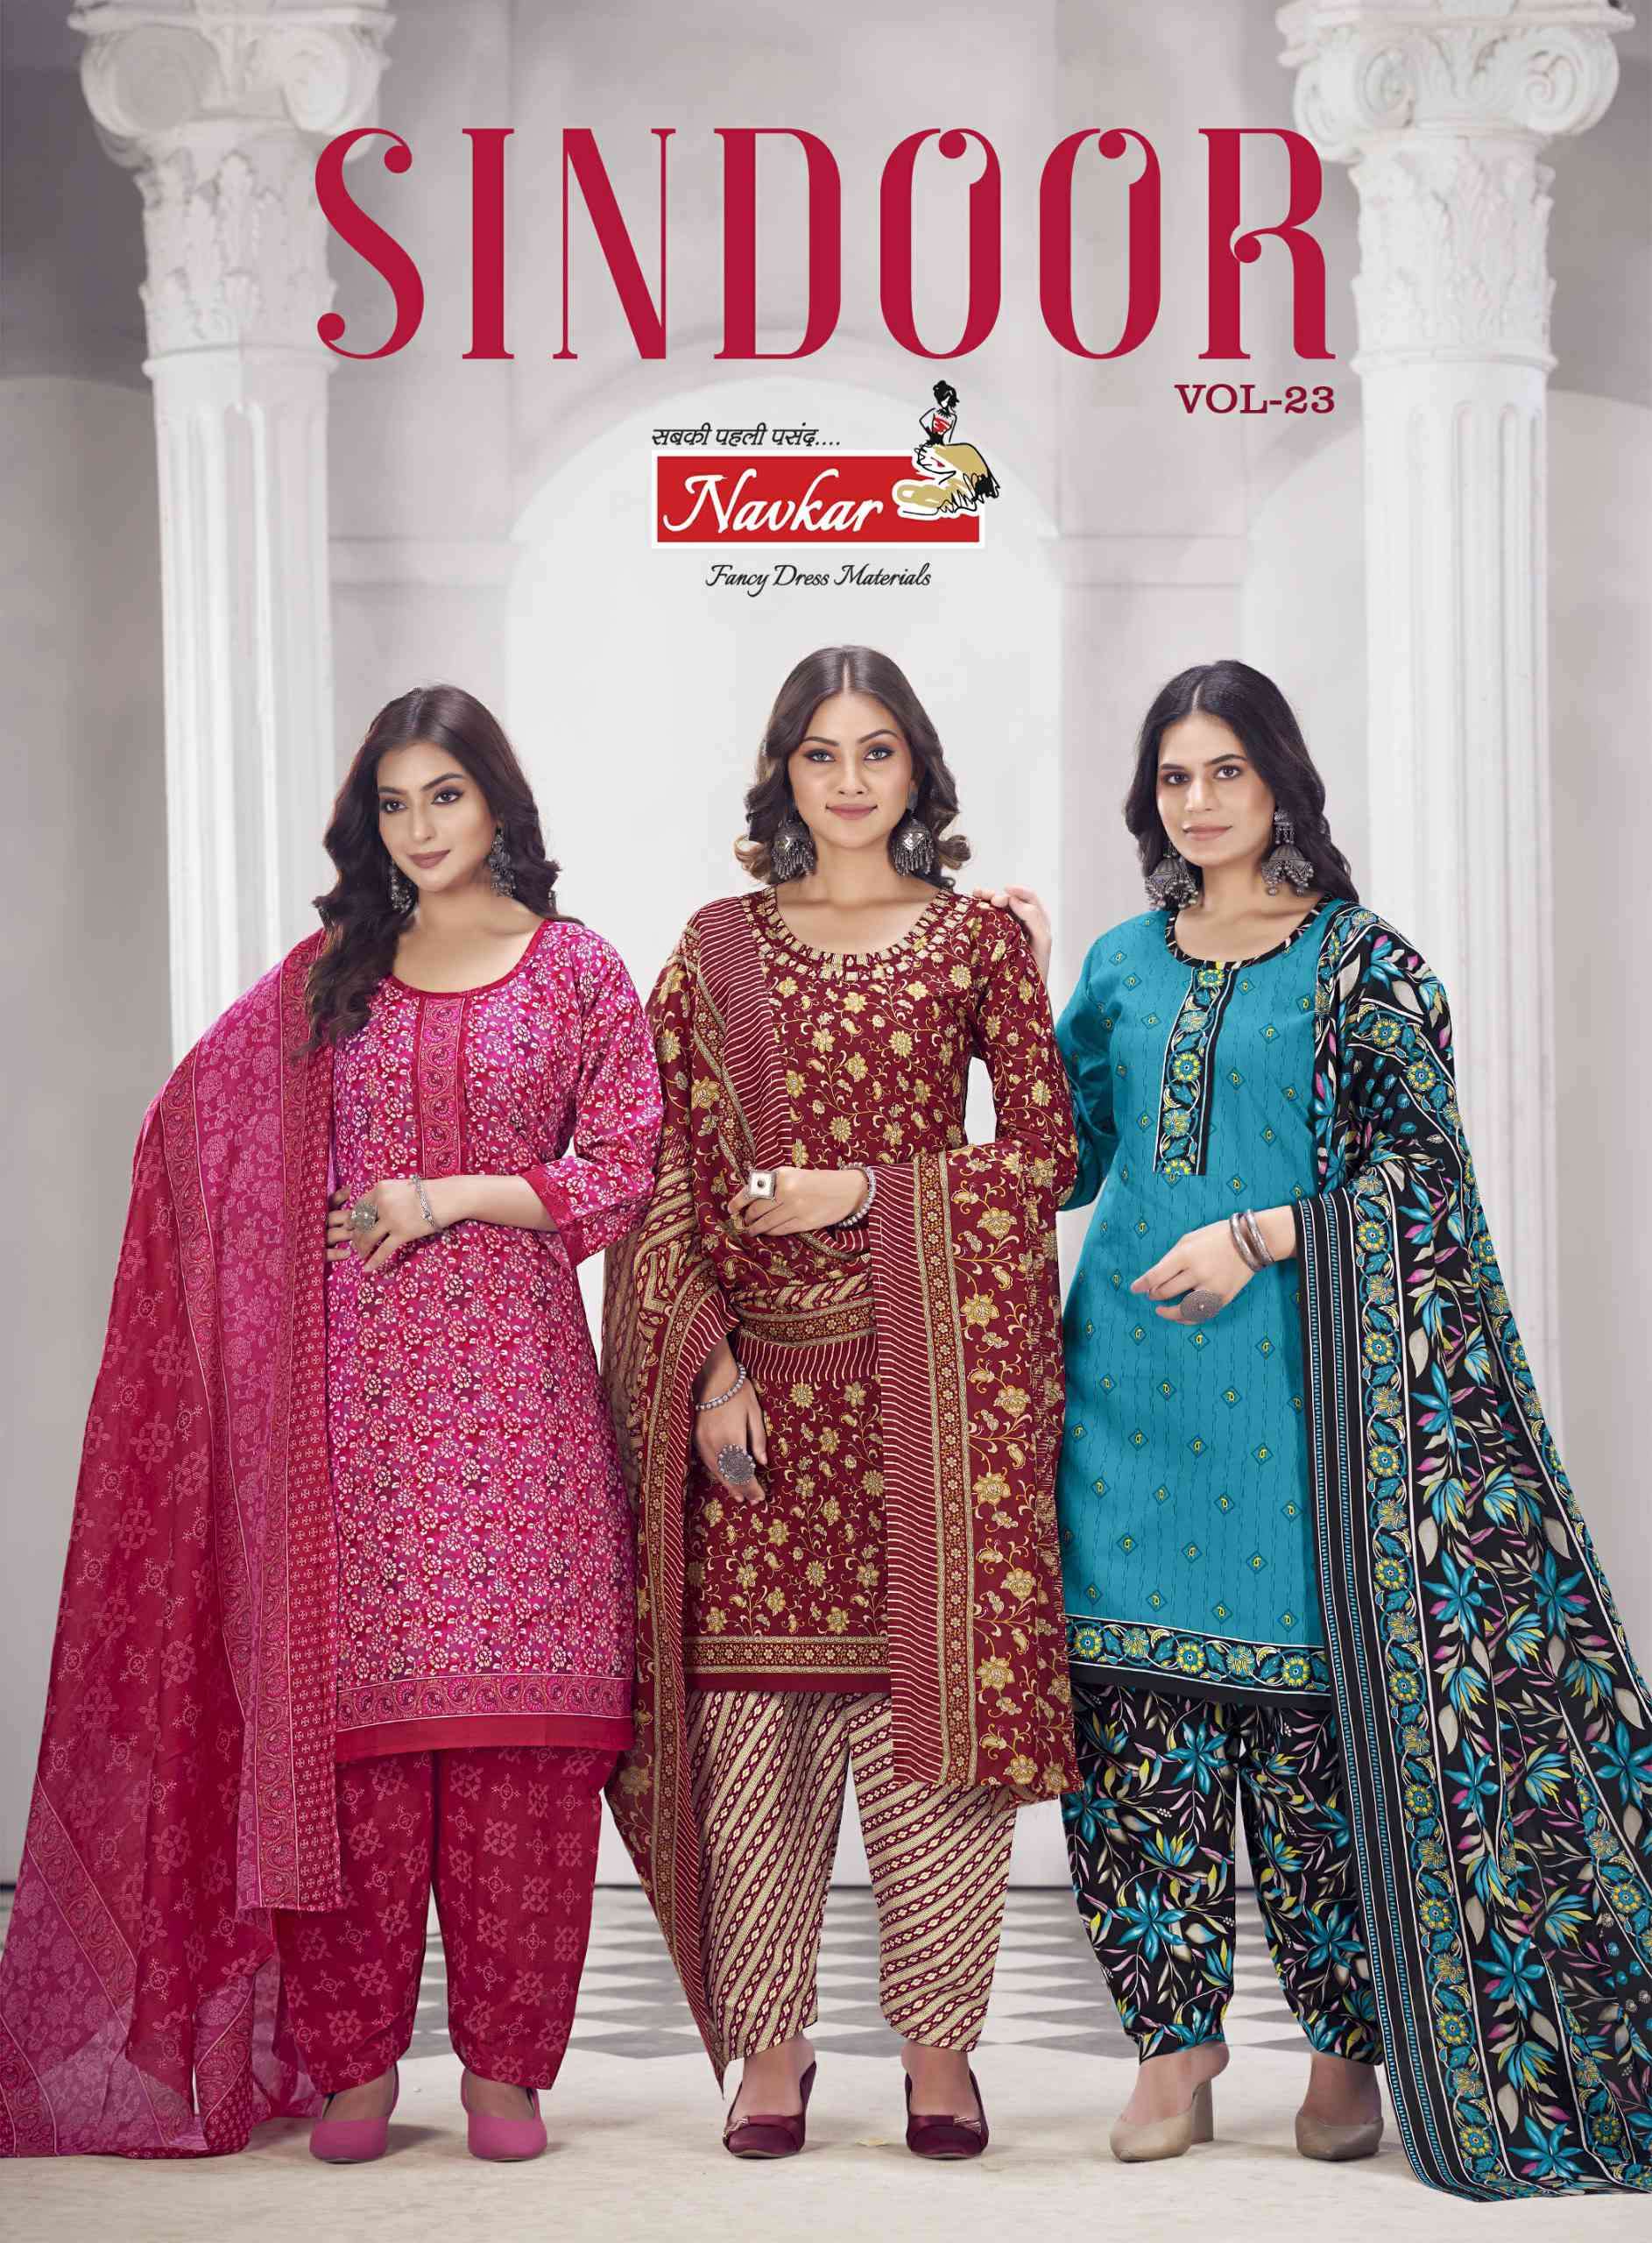 Navkar Sindoor Vol 23 Readymade Cotton Dress Catalog Exporters